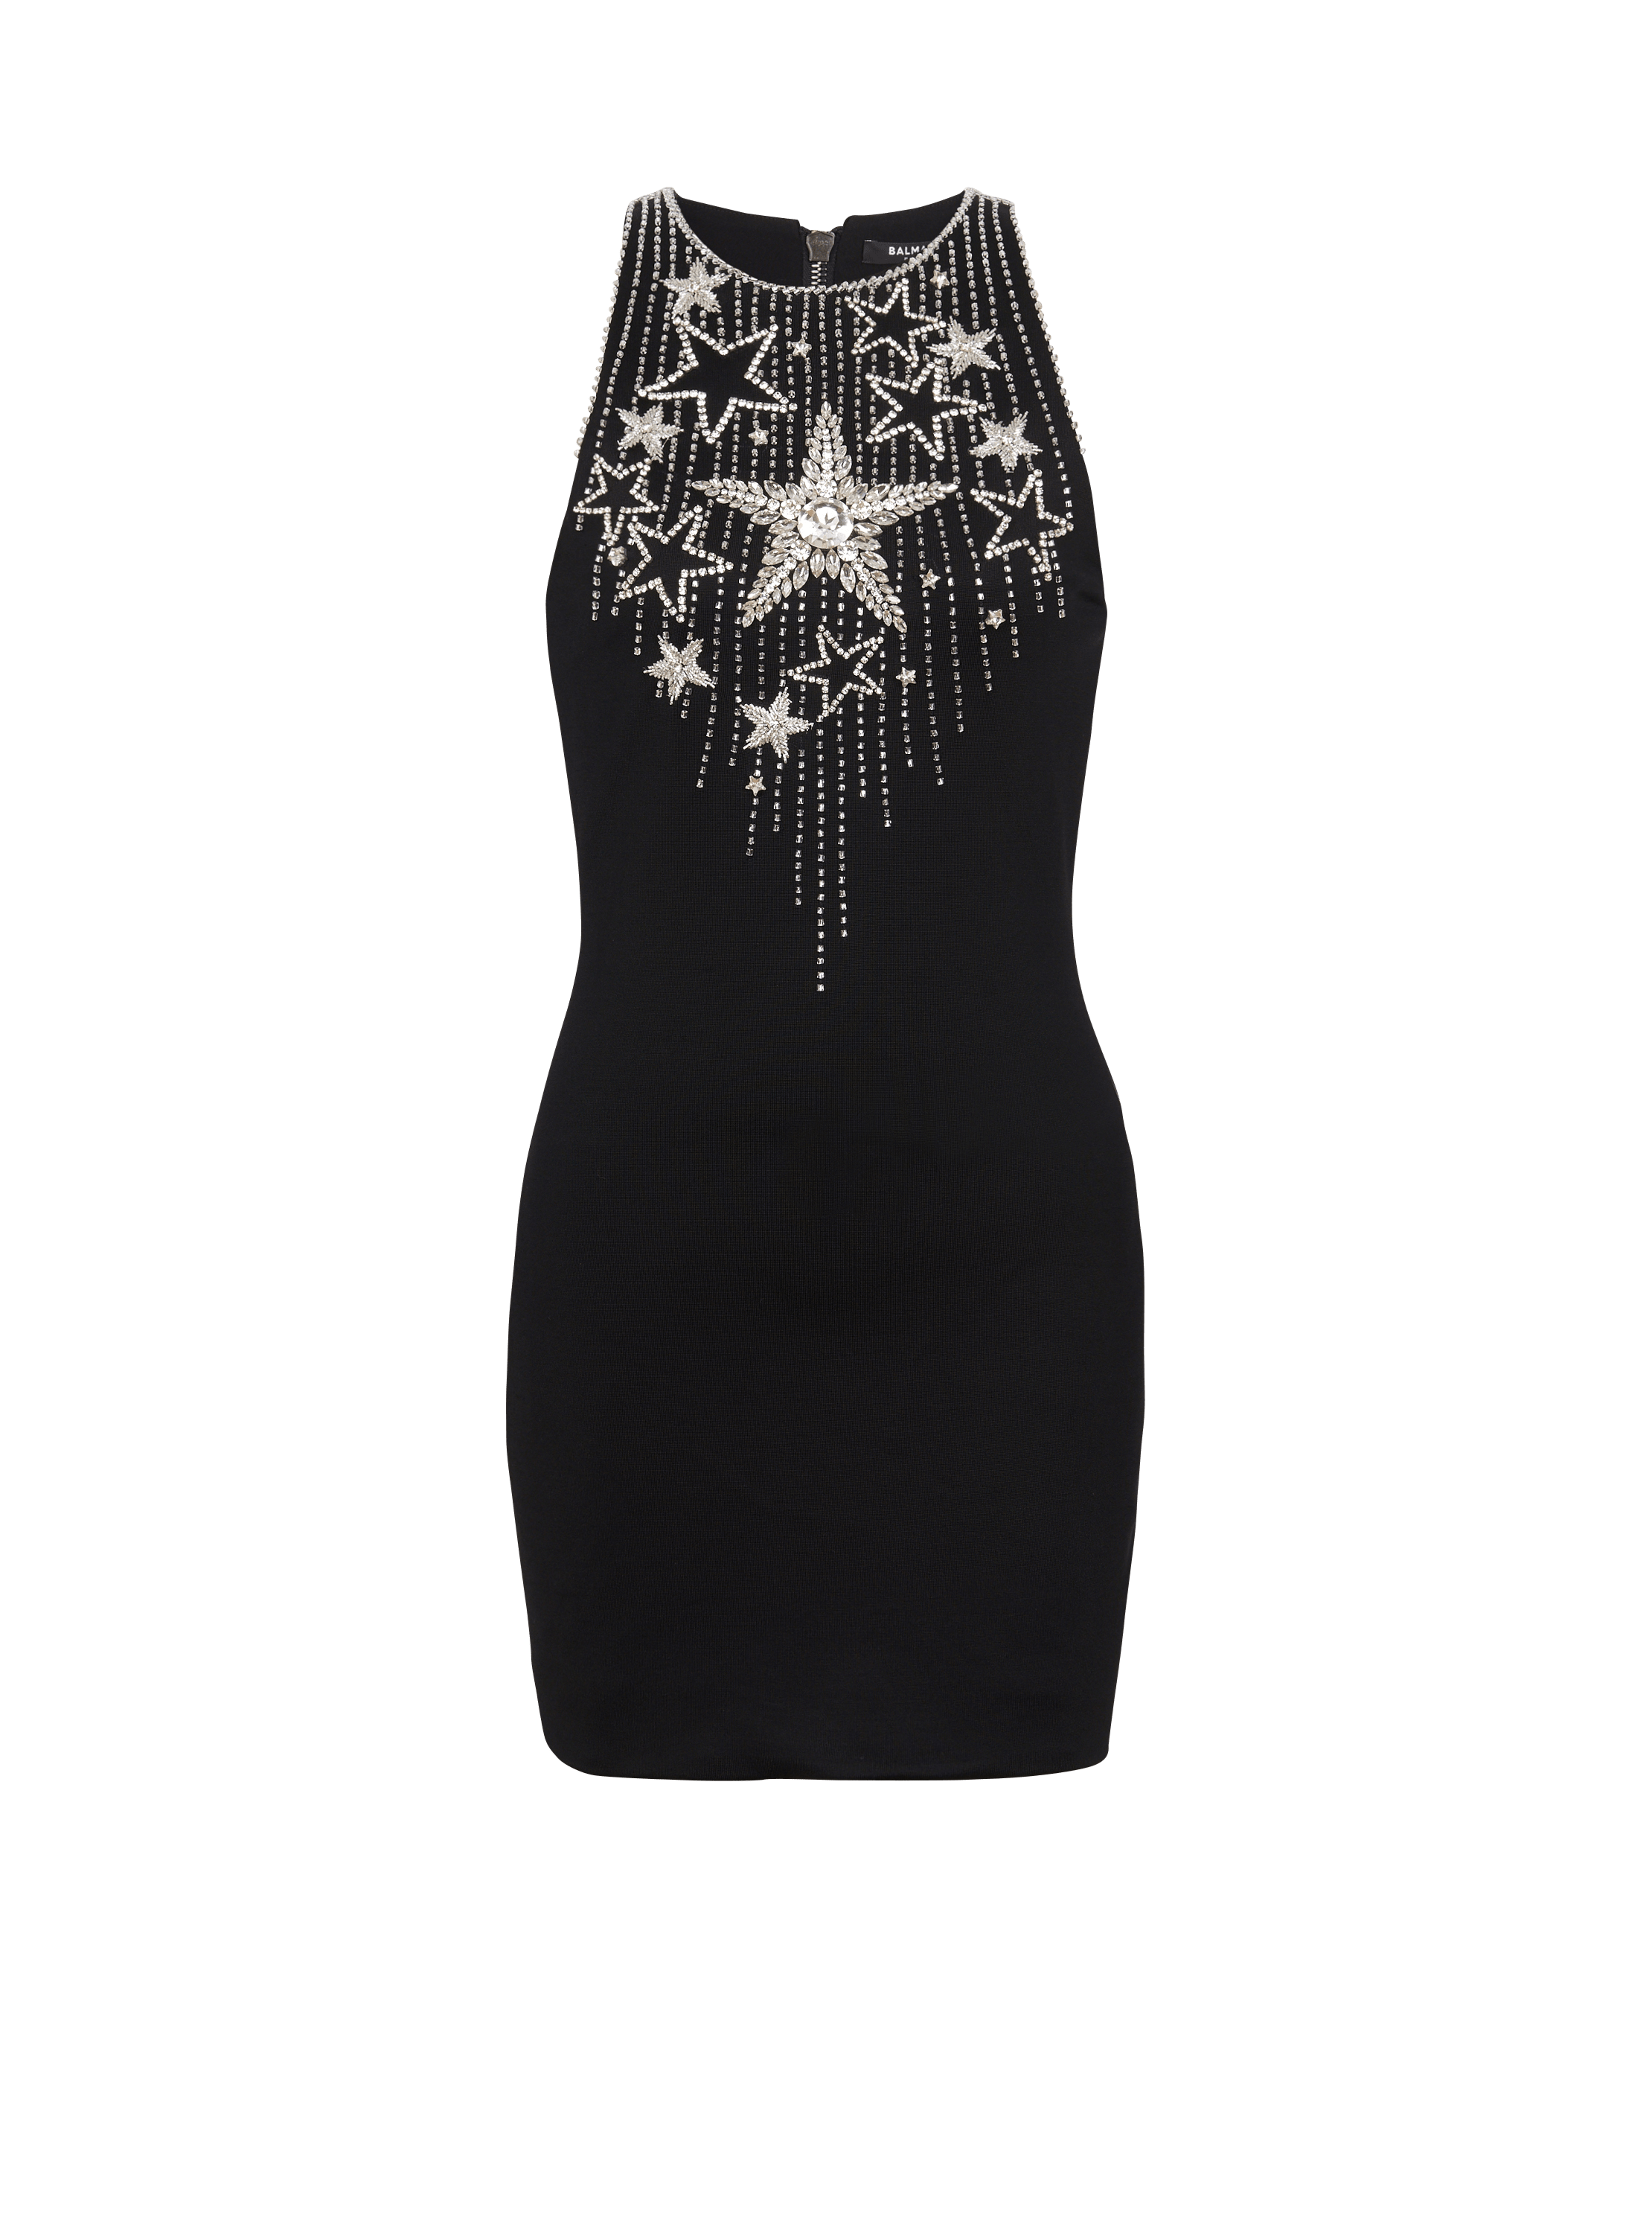 Stars embroidered short dress